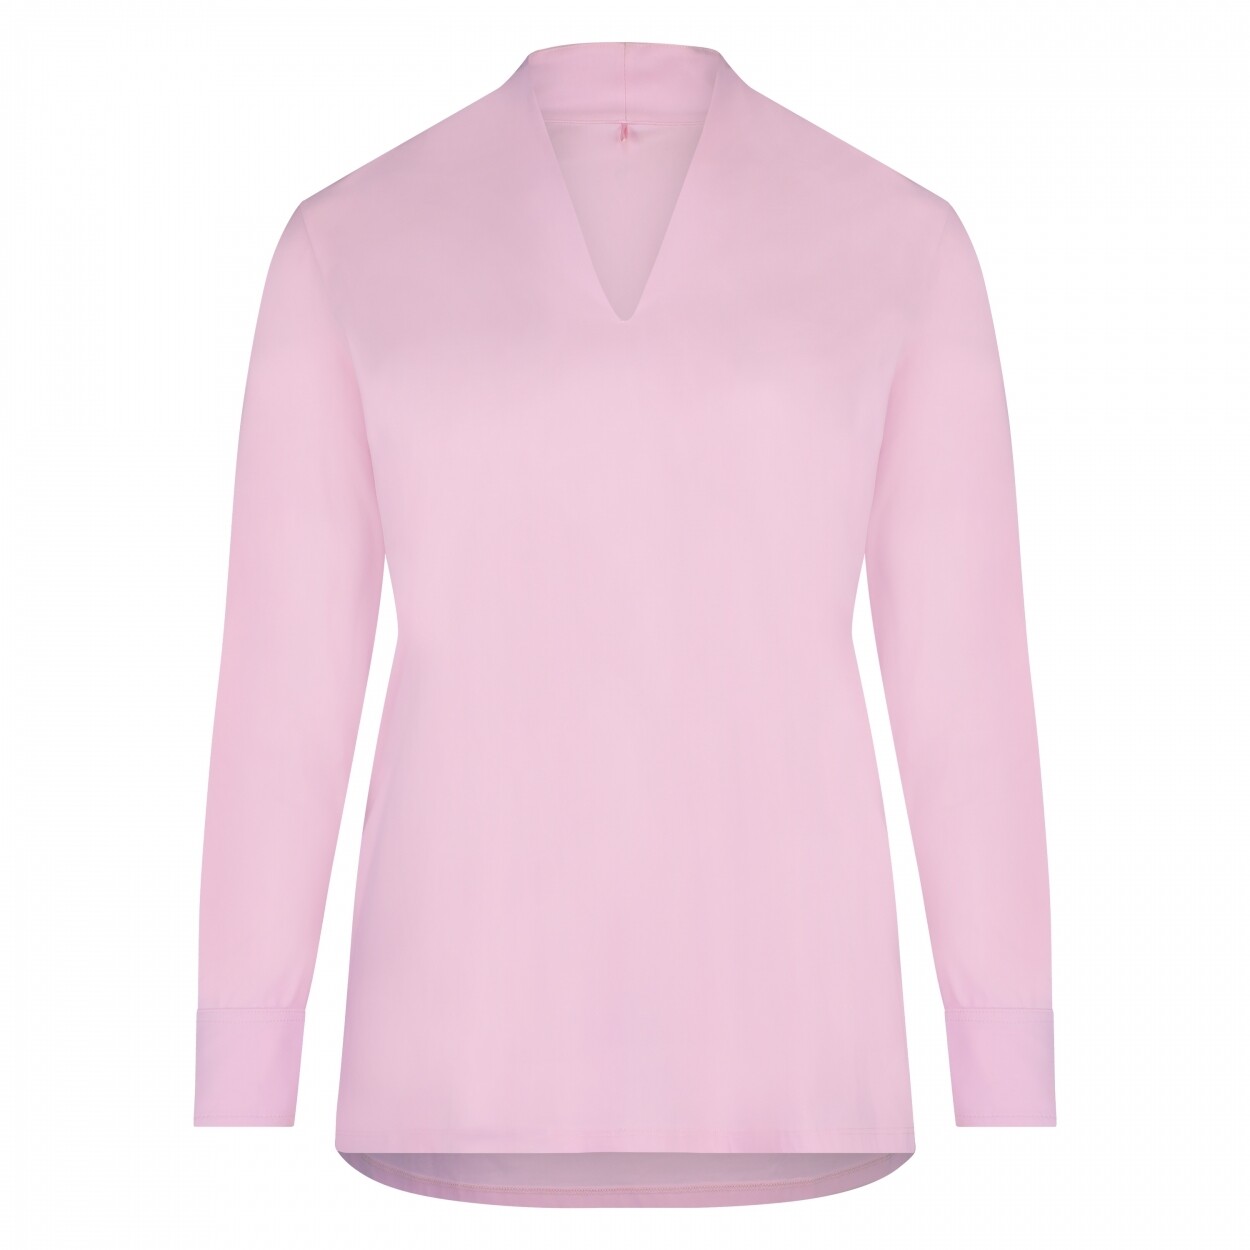 Plus Basics Shirt classic, roze